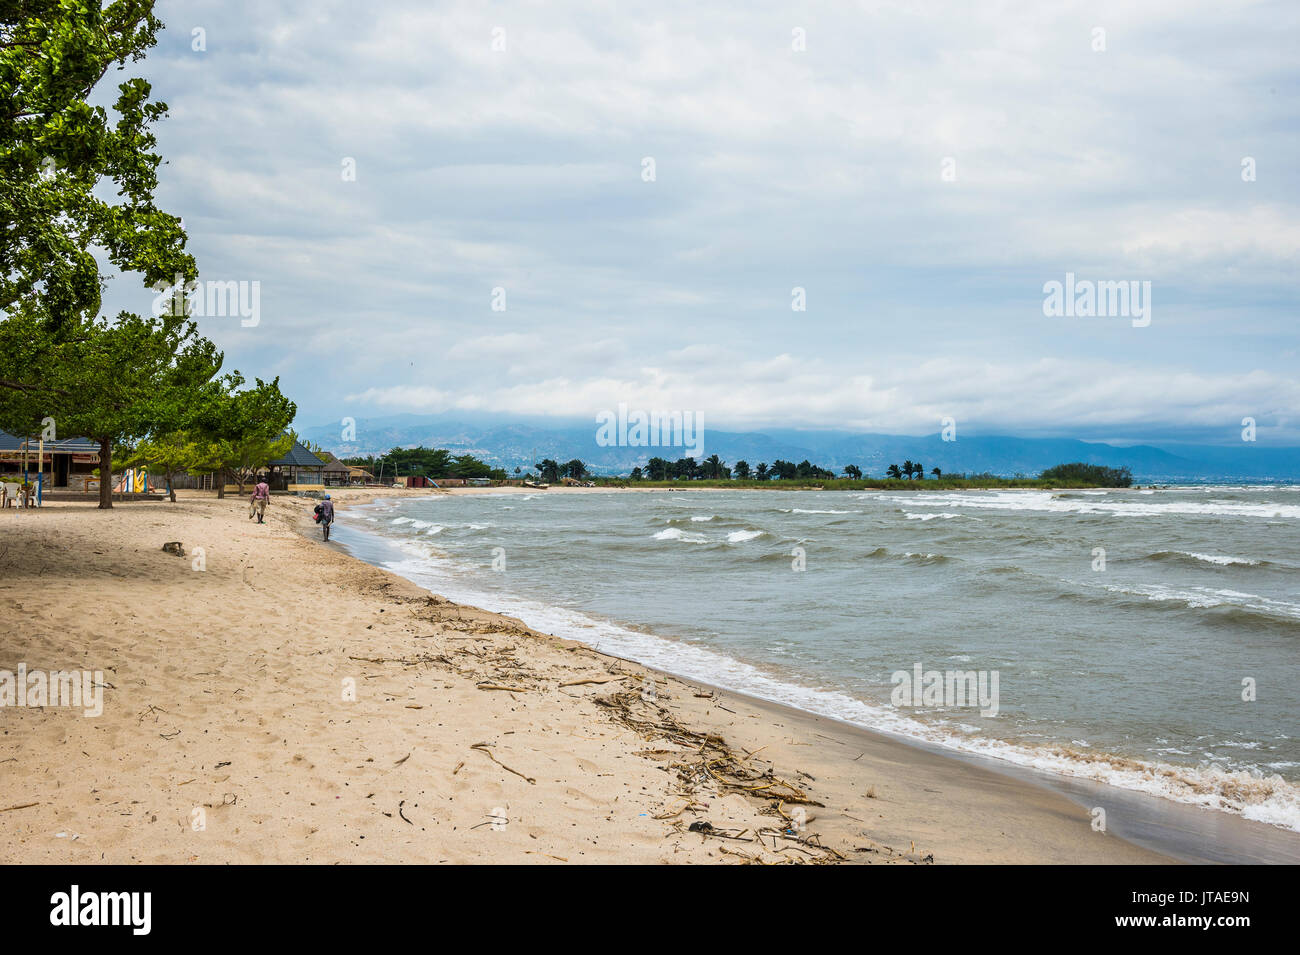 Spiaggia sulle rive del lago Tanganica, Bujumbura, Burundi, Africa Foto Stock